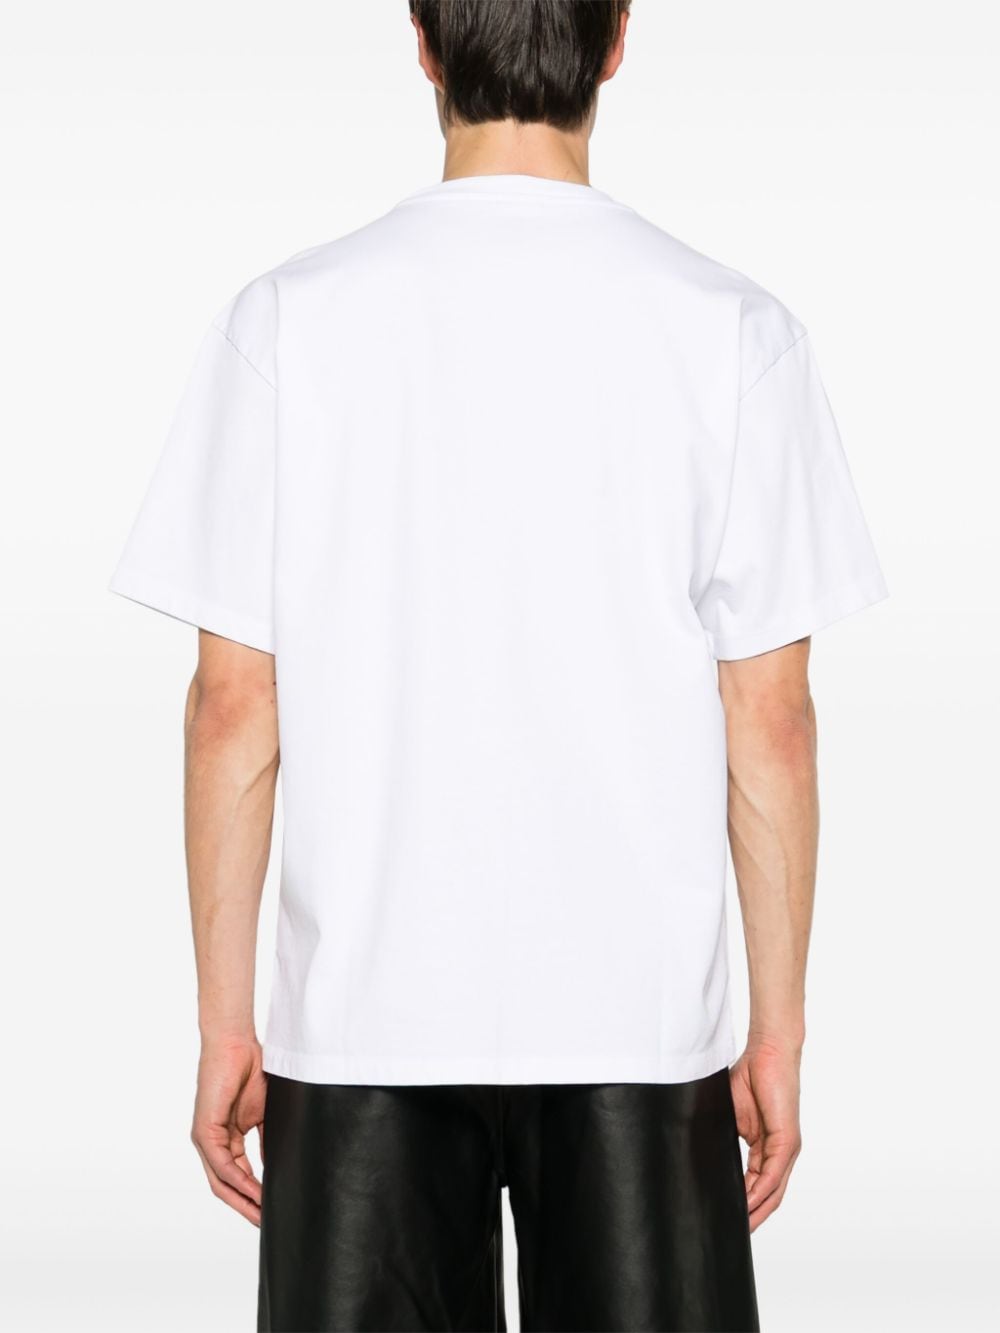 Rassvet RASSVET- Cotton T-shirt With Print